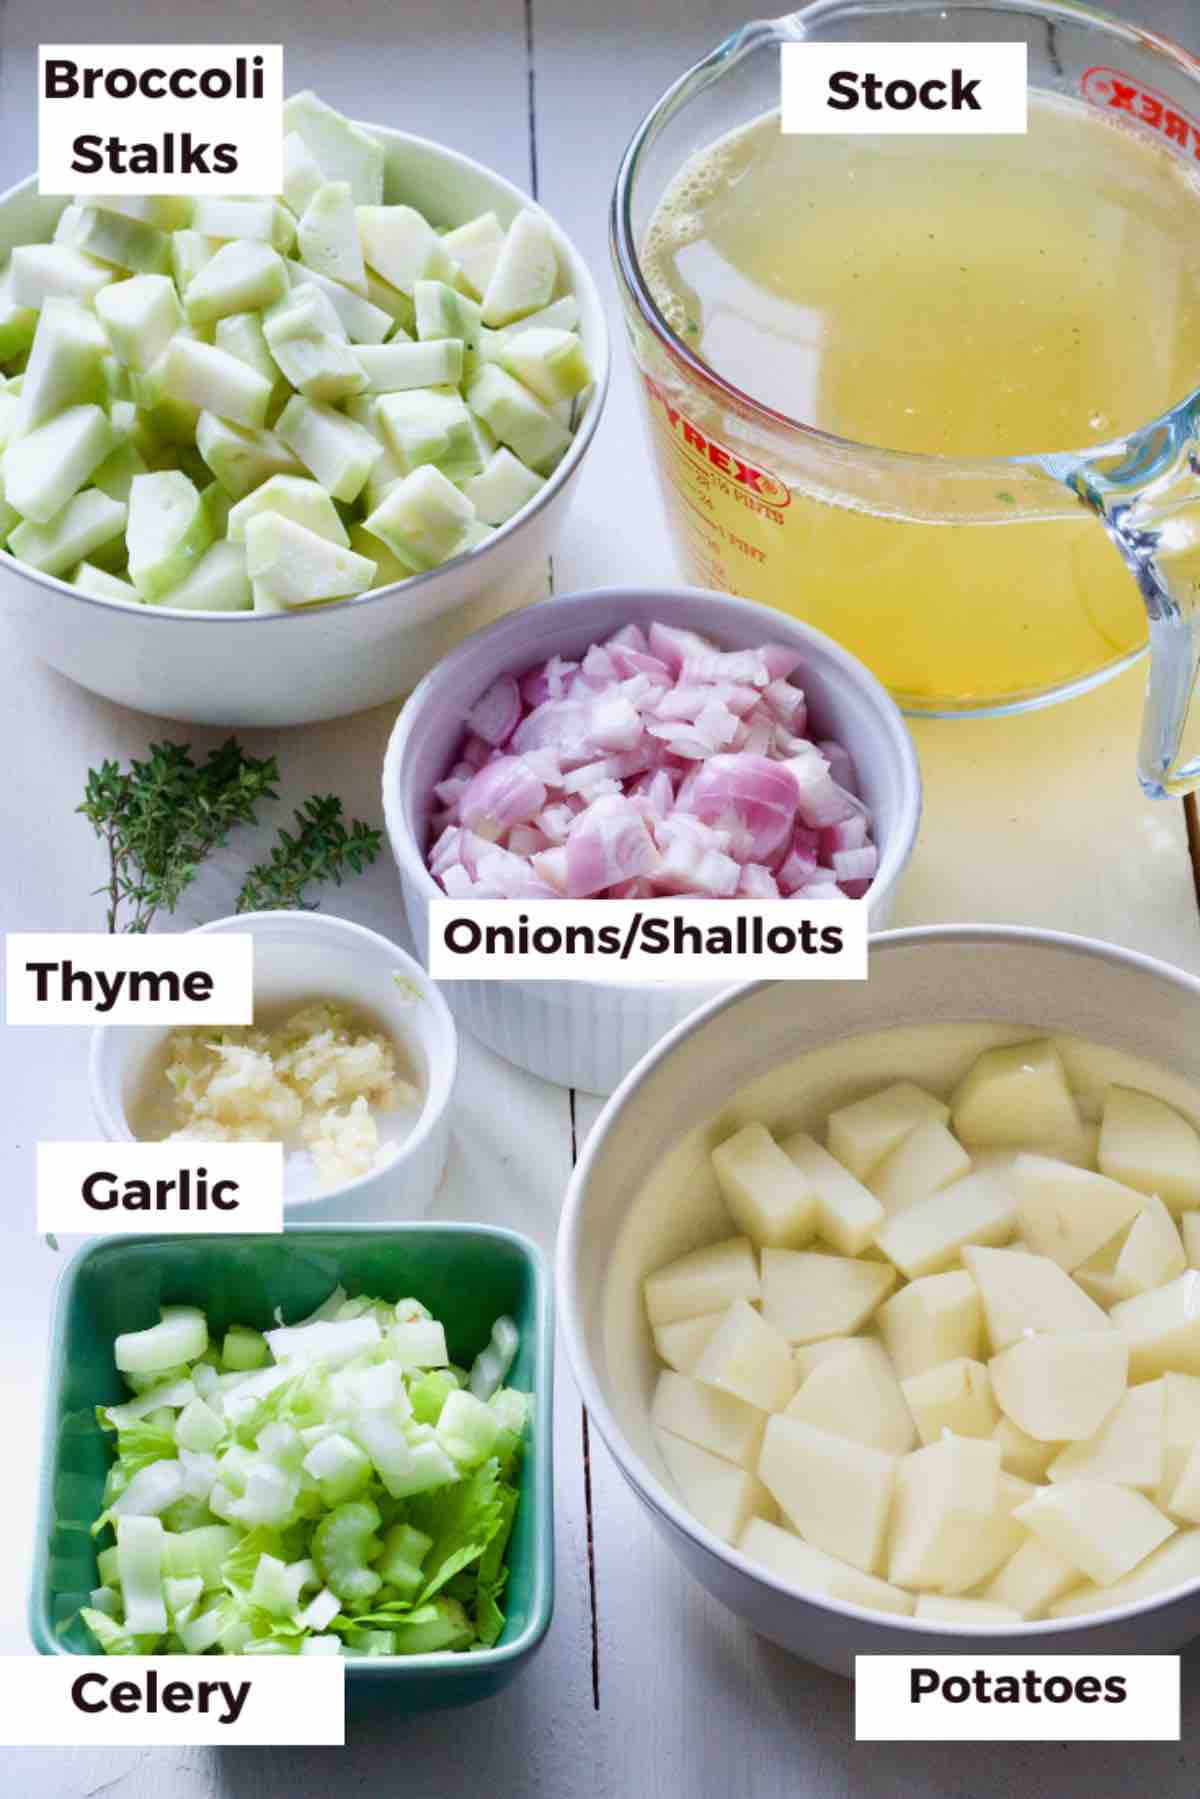 Ingredients for making broccoli stalk soup.